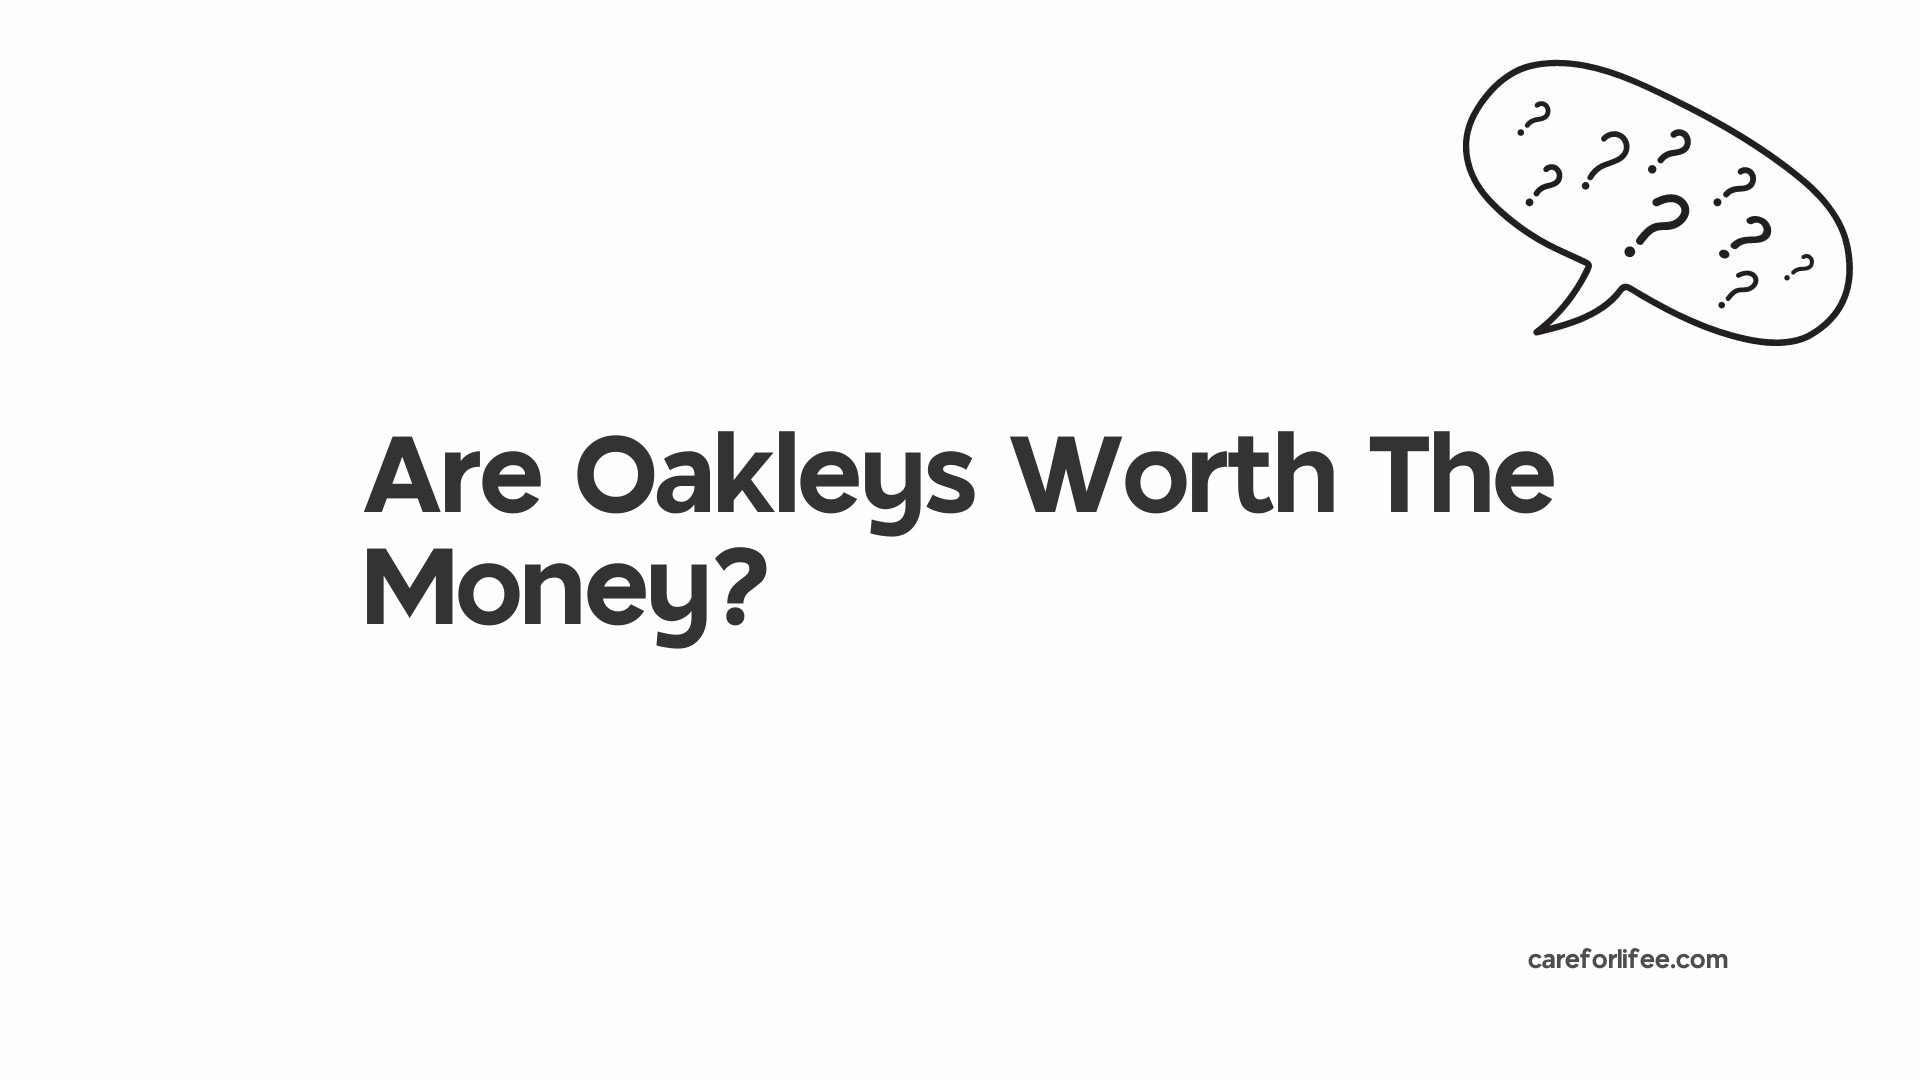 Are Oakleys Worth The Money?